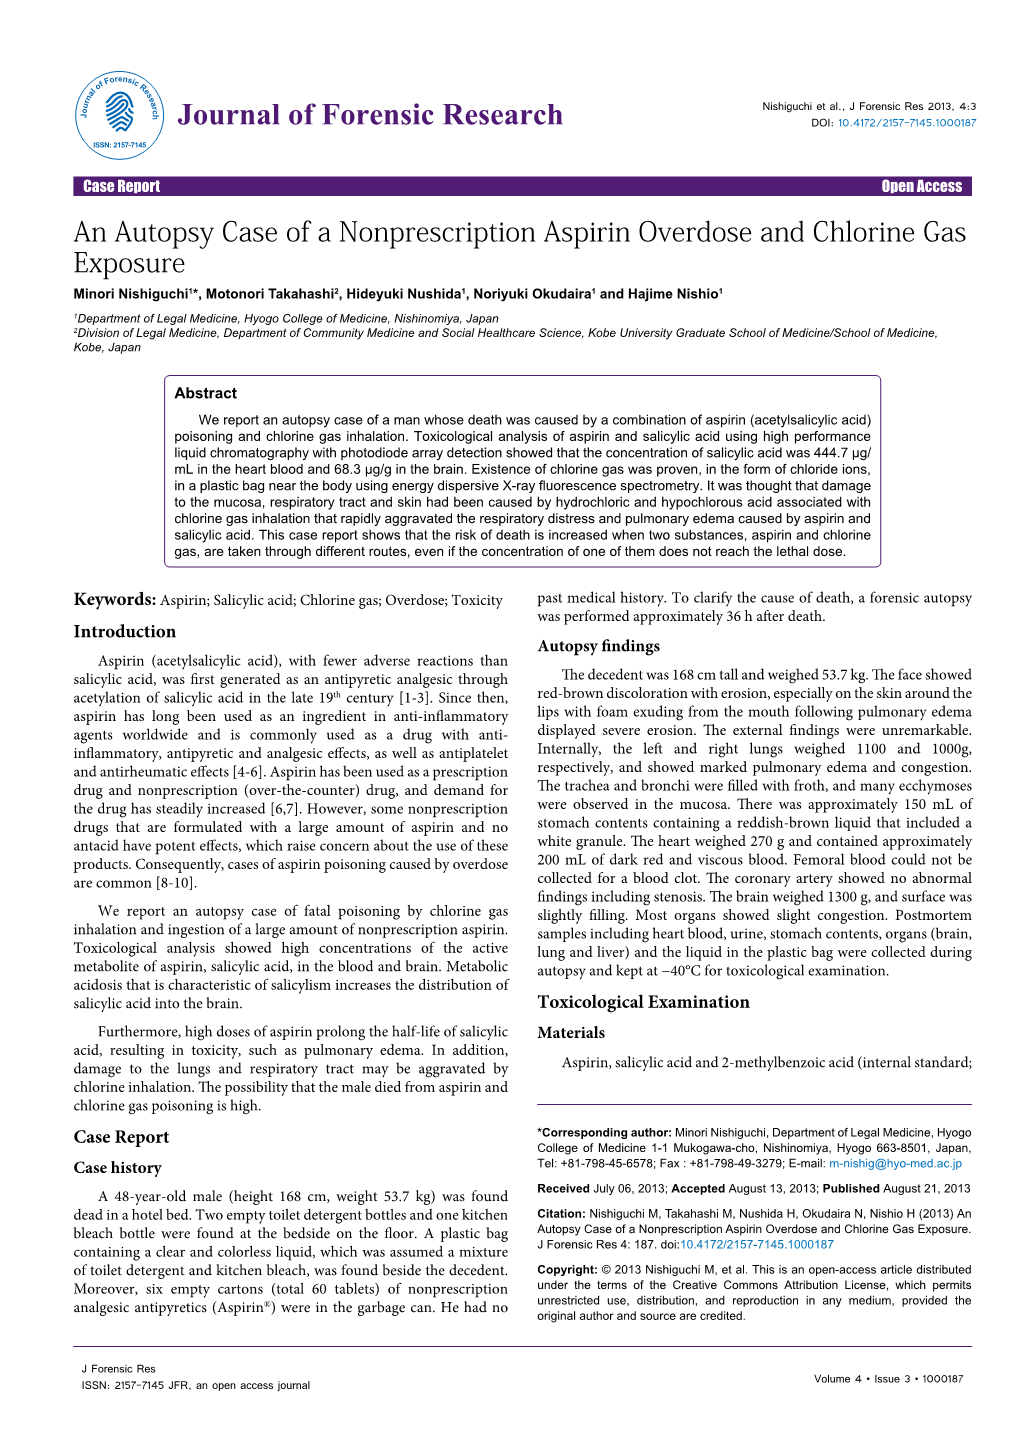 An Autopsy Case of a Nonprescription Aspirin Overdose and Chlorine